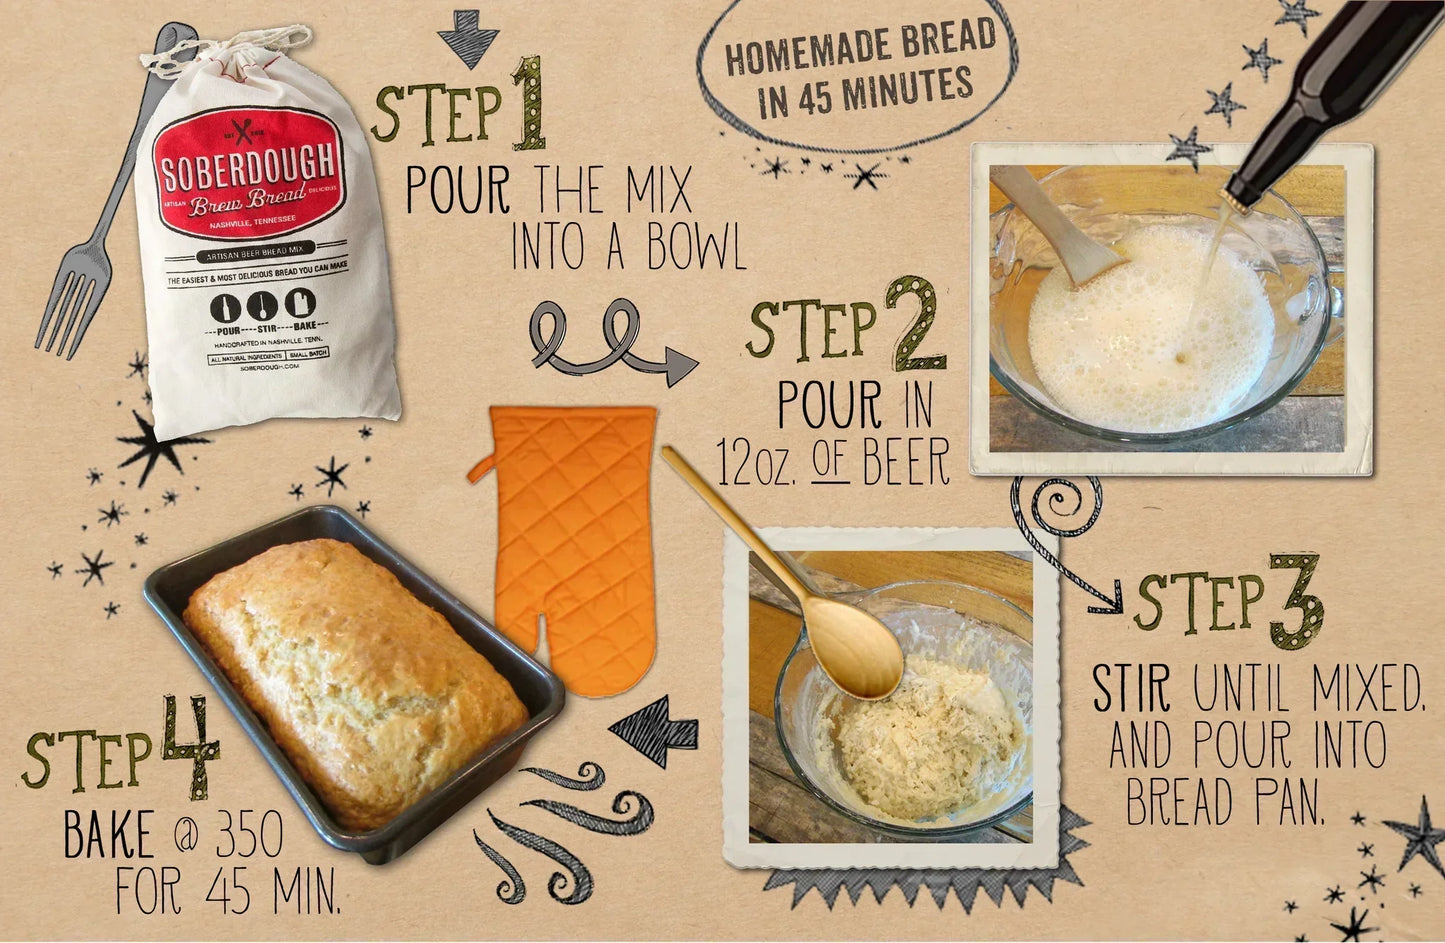 Soberdough - Honey Wheat Artisan Brew Bread